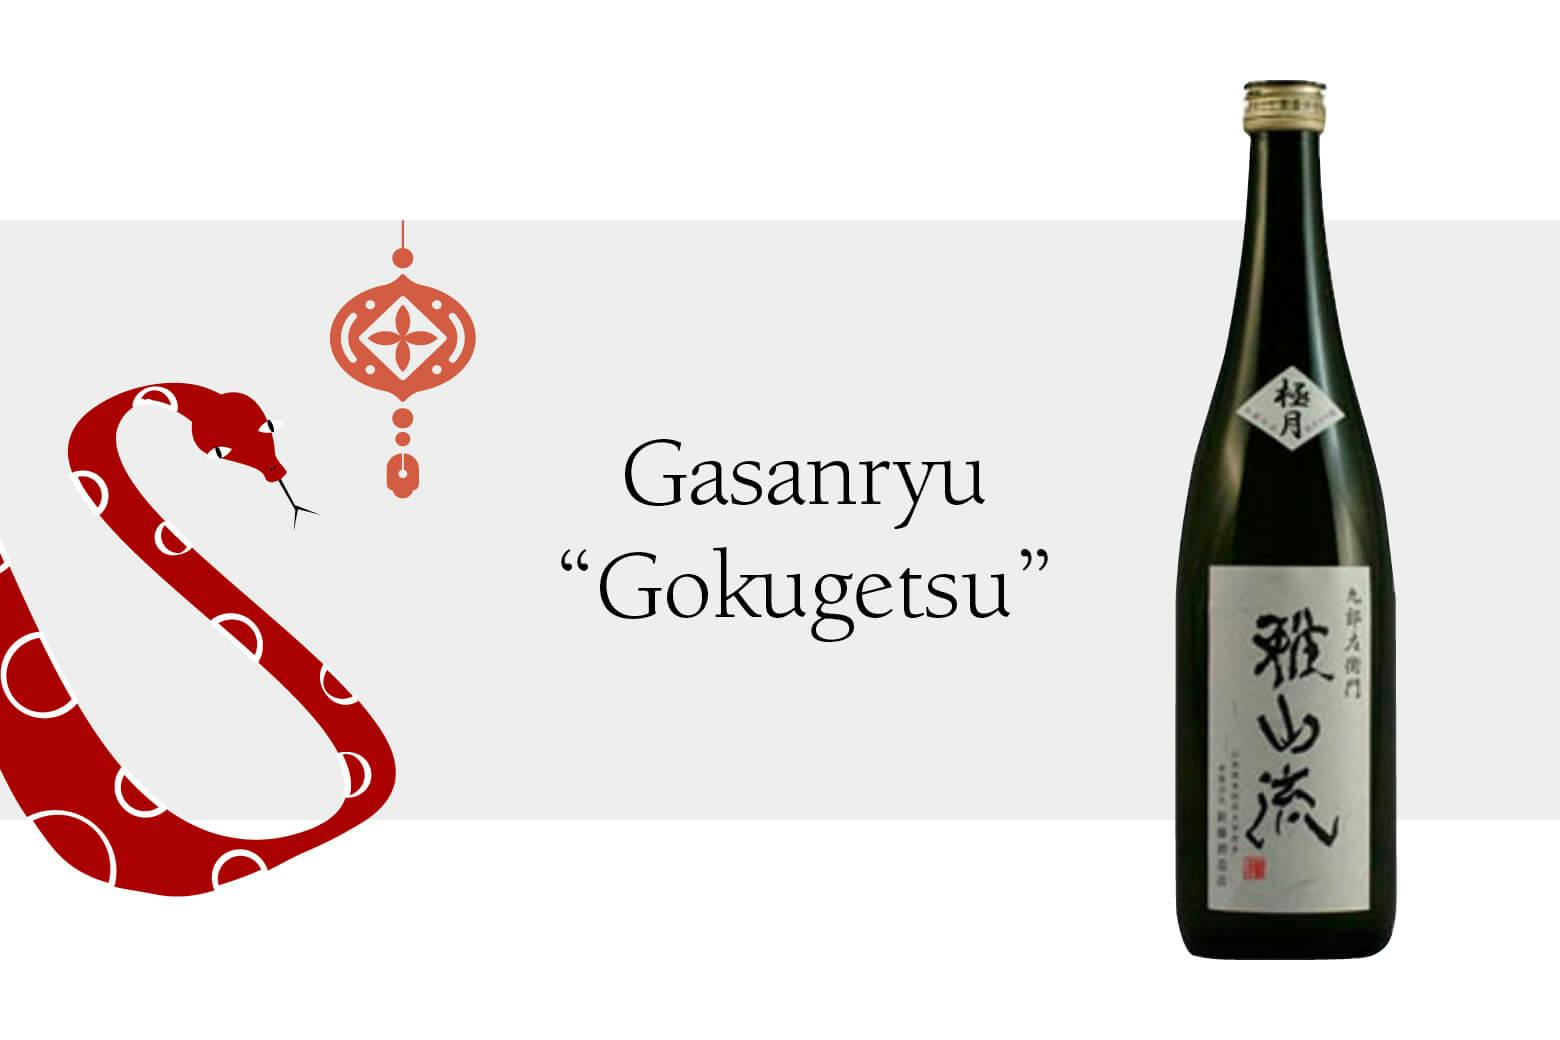 Gasanryu “Gokugetsu” with Chinese zodiac Snake